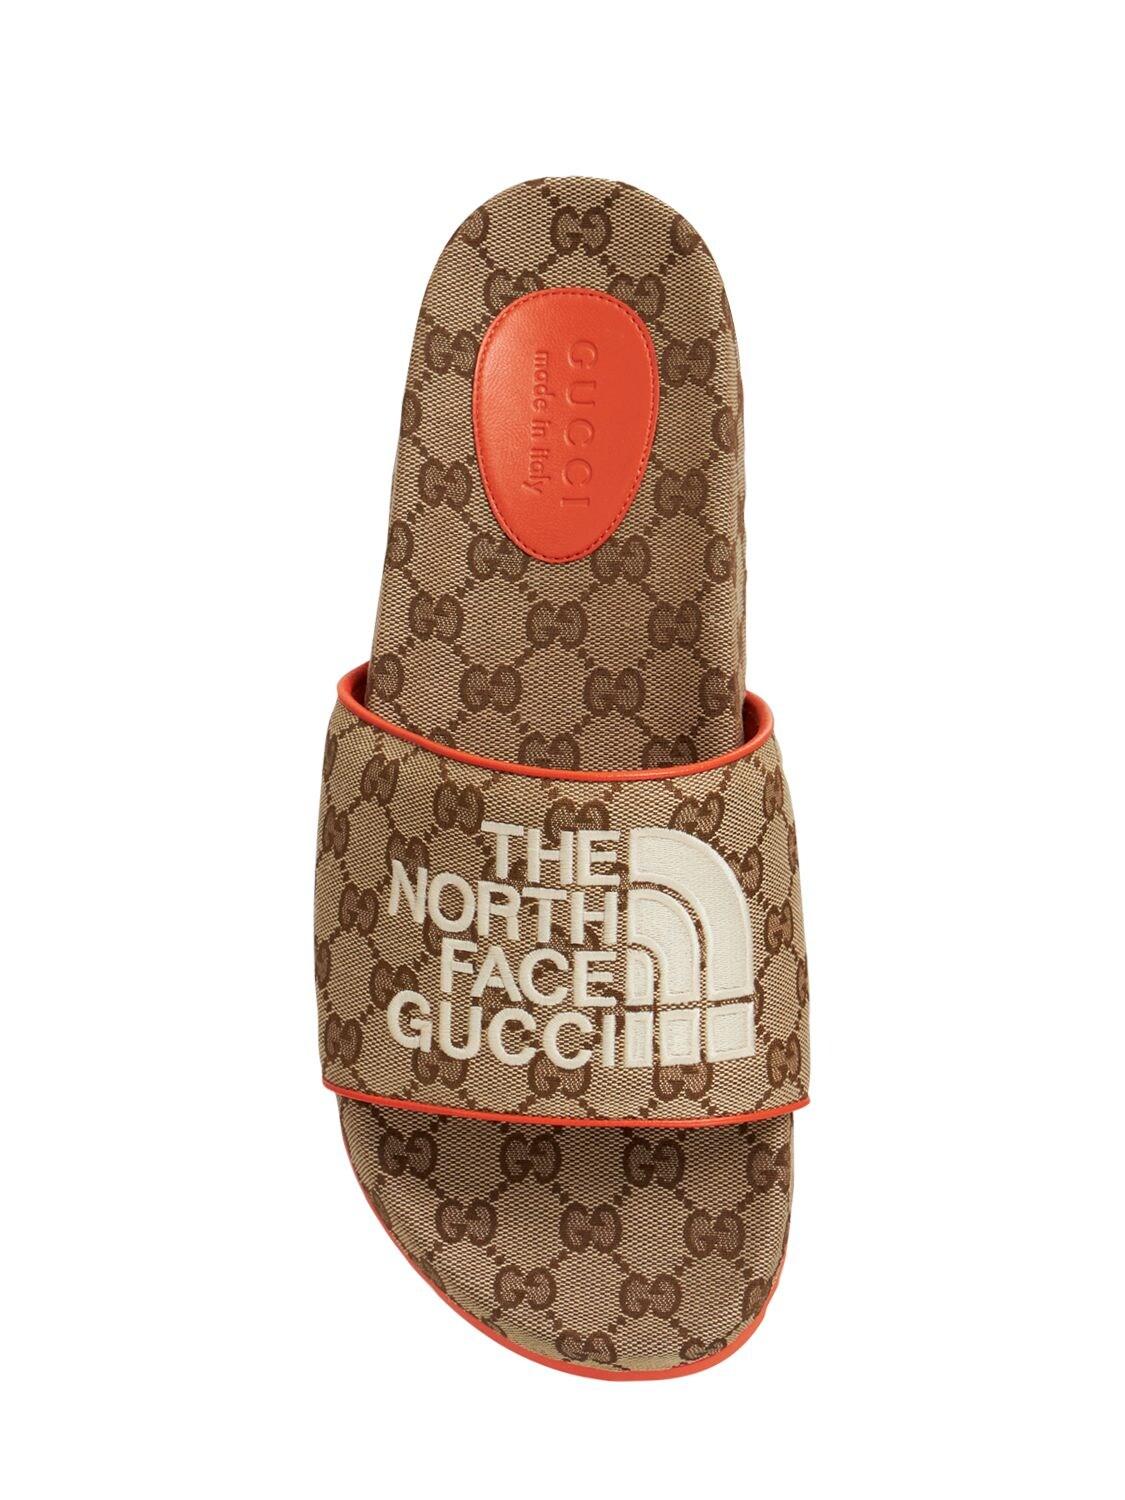 Gucci x The North Face Monogram Slides - Farfetch